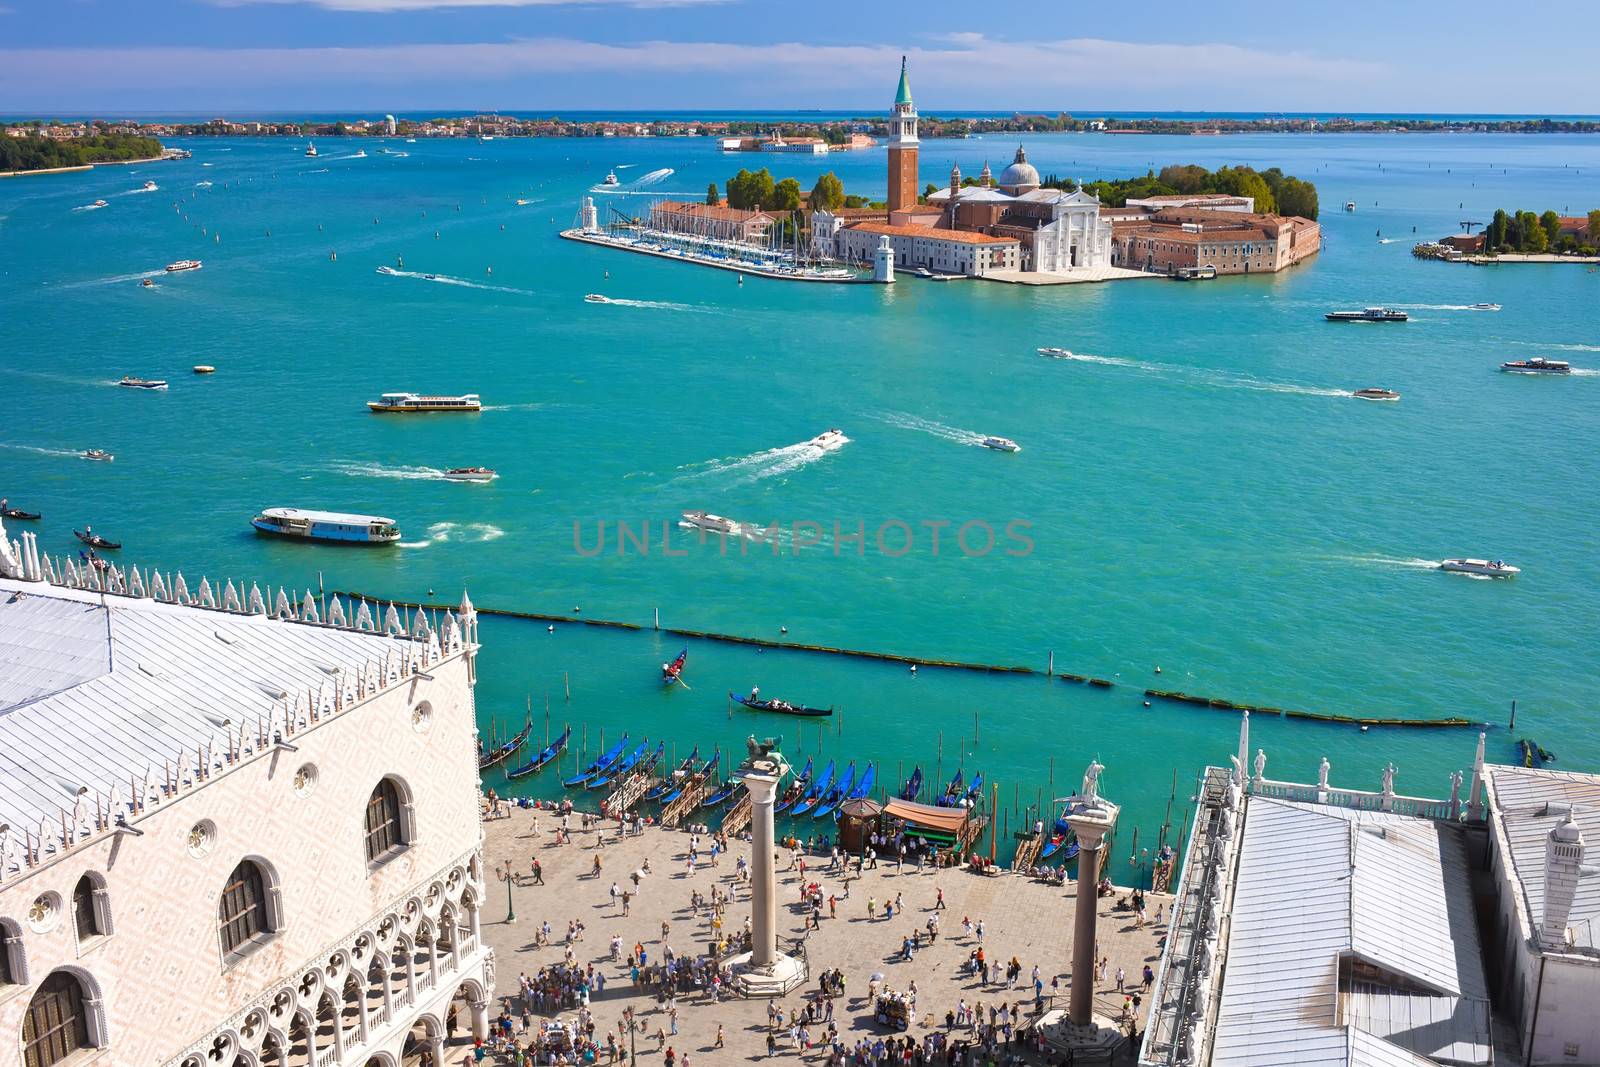 Venice by sailorr